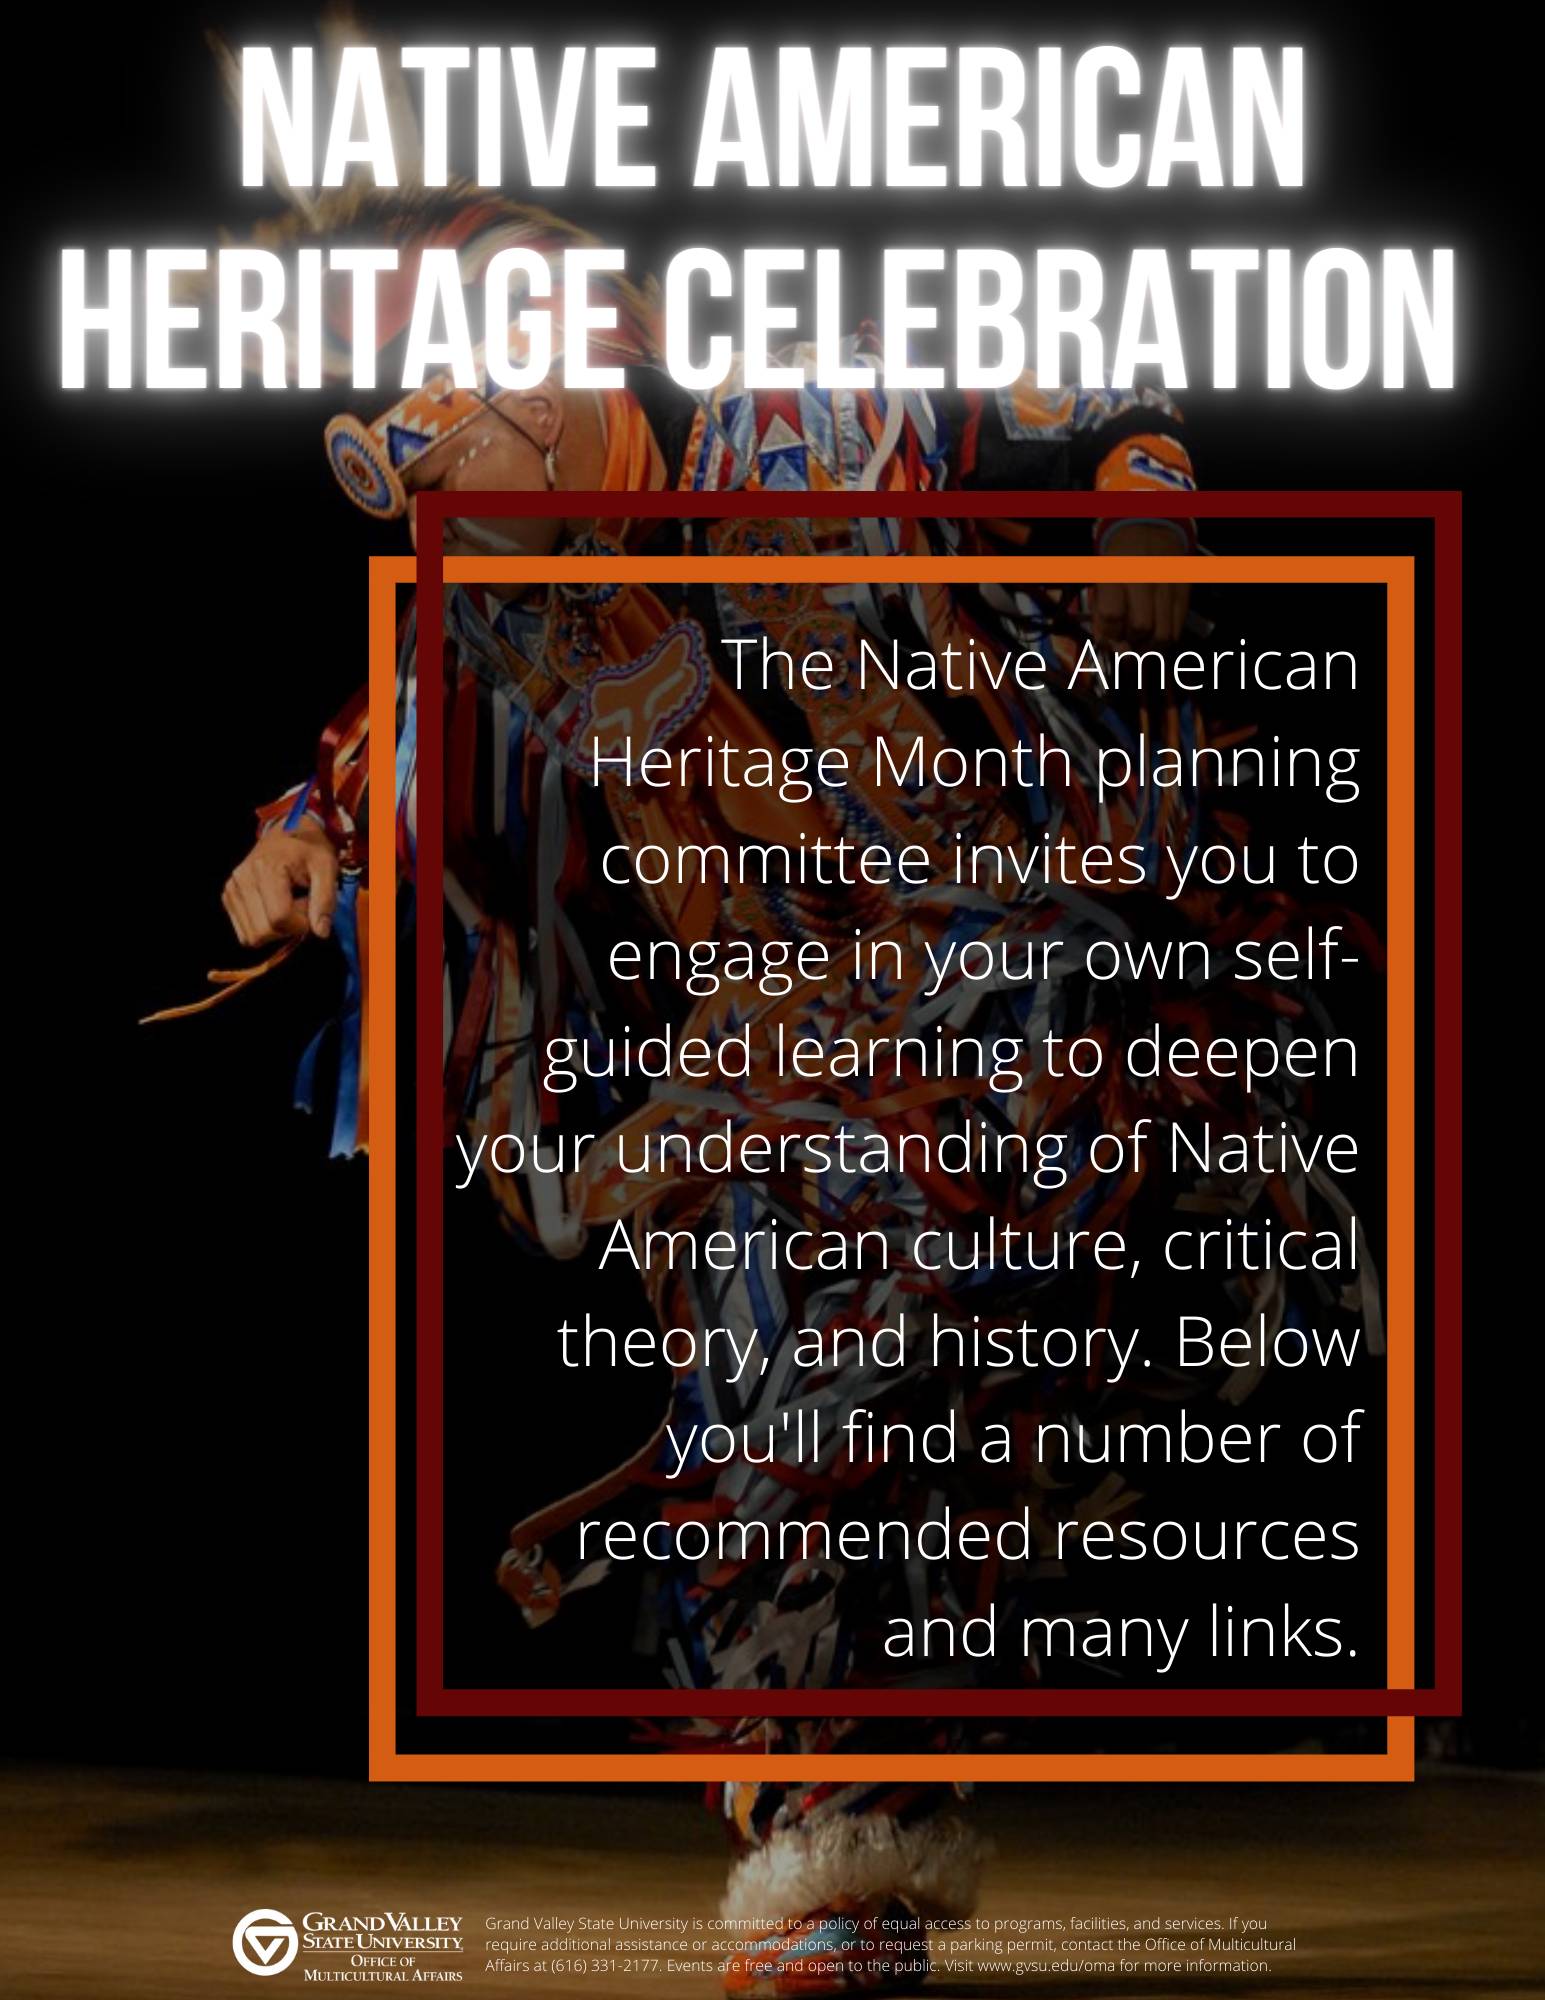 Native American Heritage Celebration Resource Guide